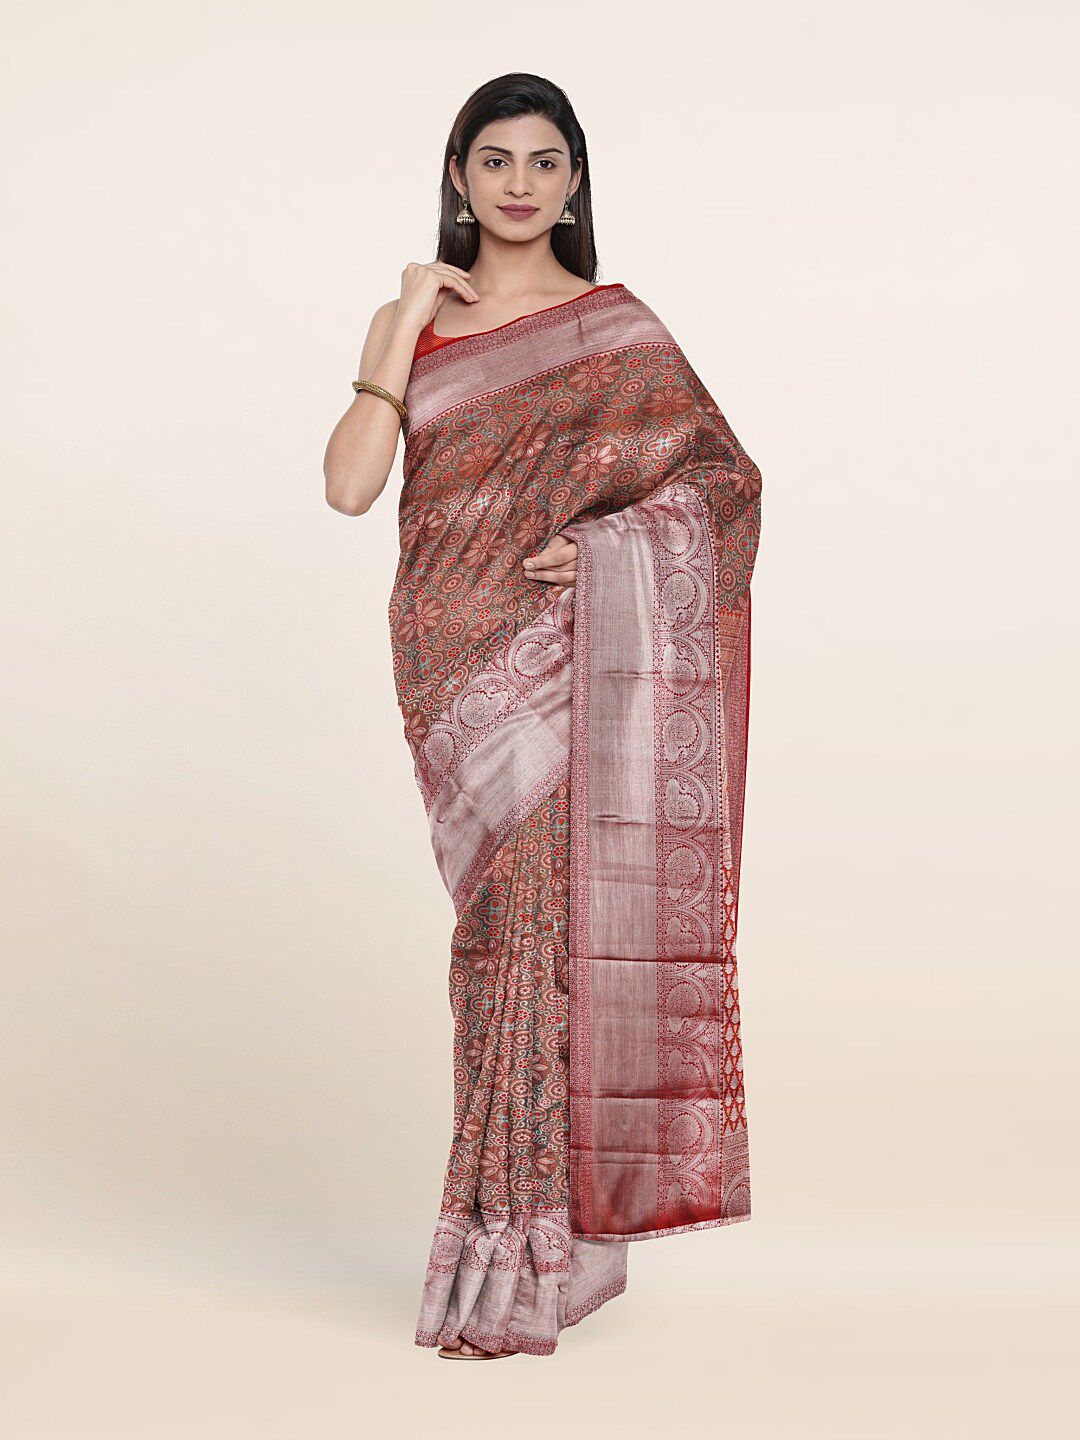 Pothys Brown & Silver-Toned Floral Zari Pure Silk Saree Price in India